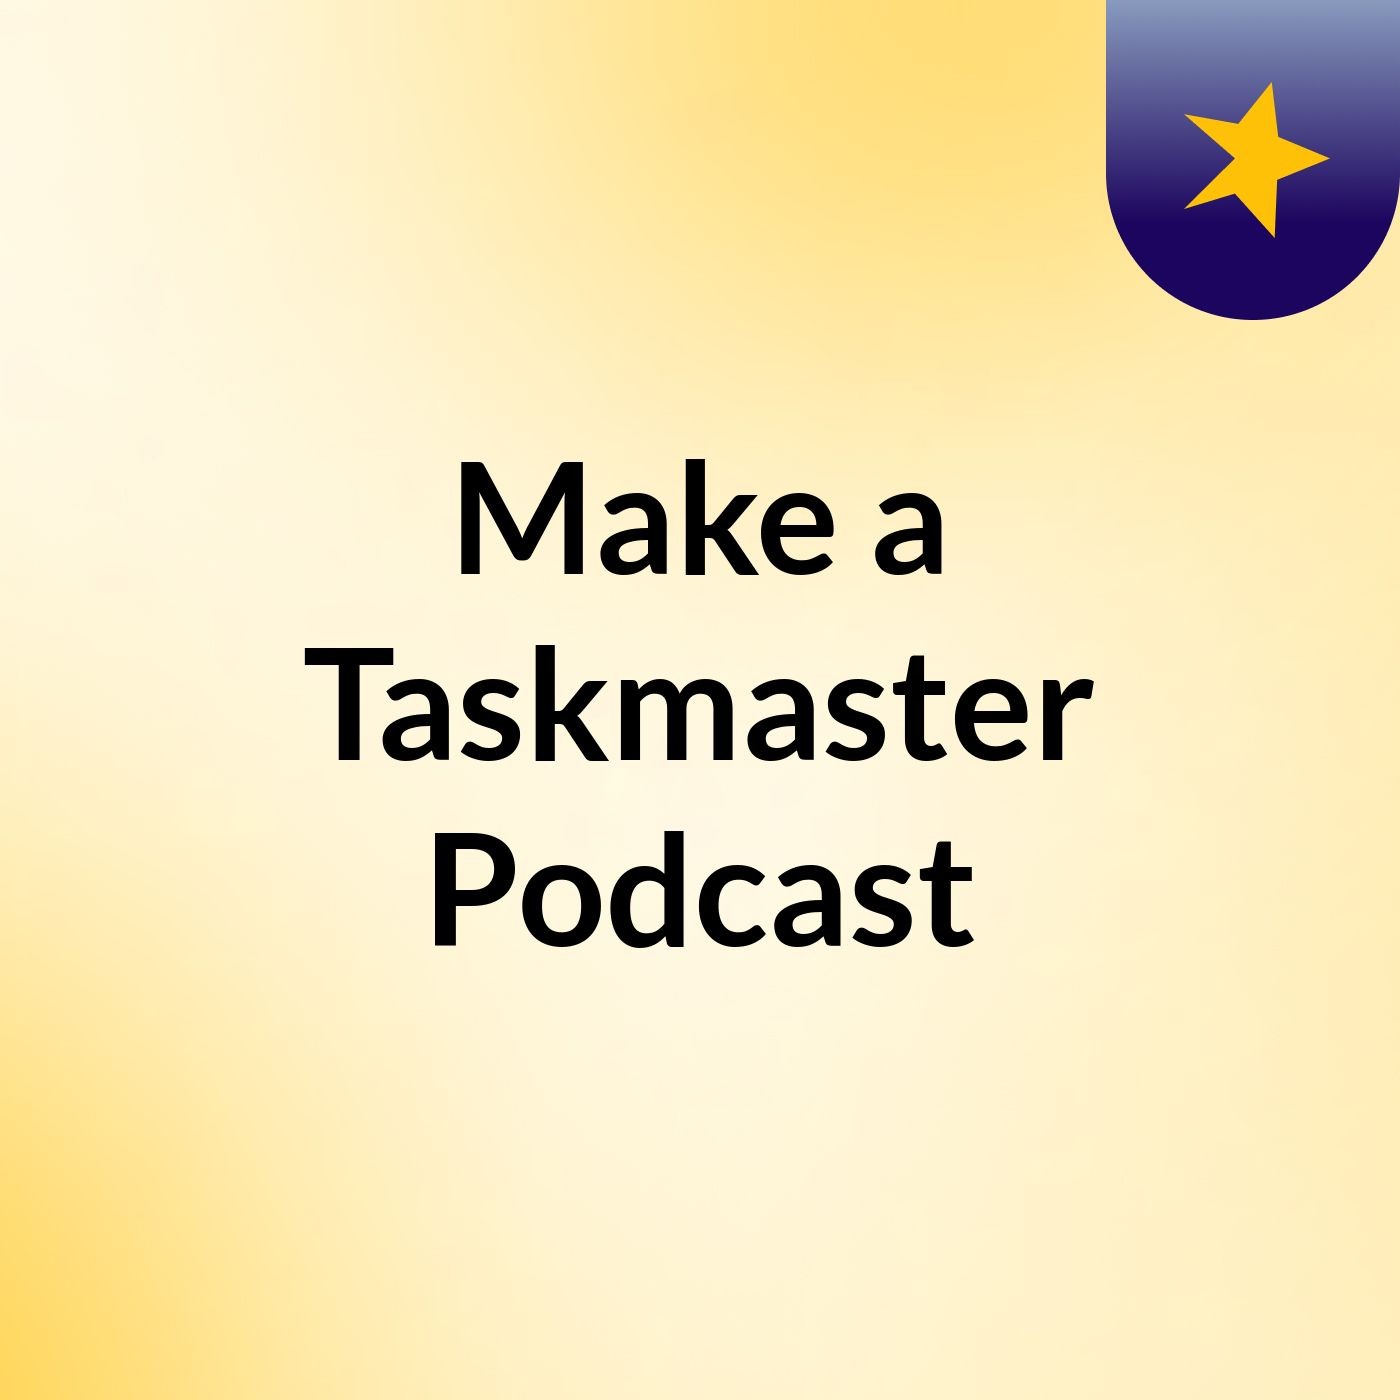 Make a Taskmaster Podcast